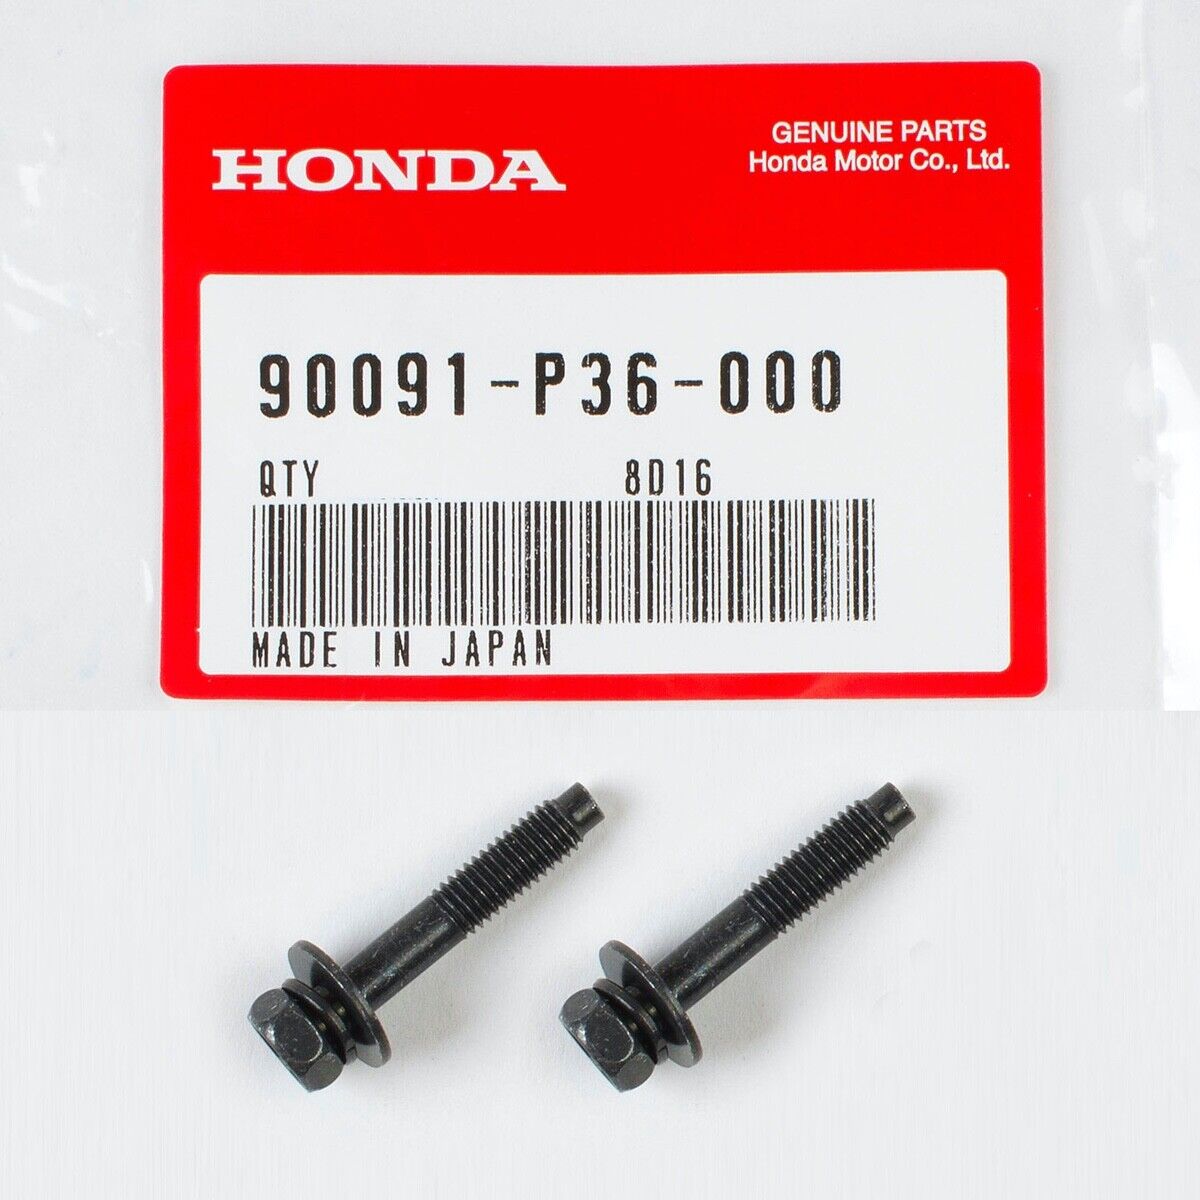 Genuine Honda Acura Engine Air Filter Box Cover Bolt 90091-P36-000 (2 Pack)